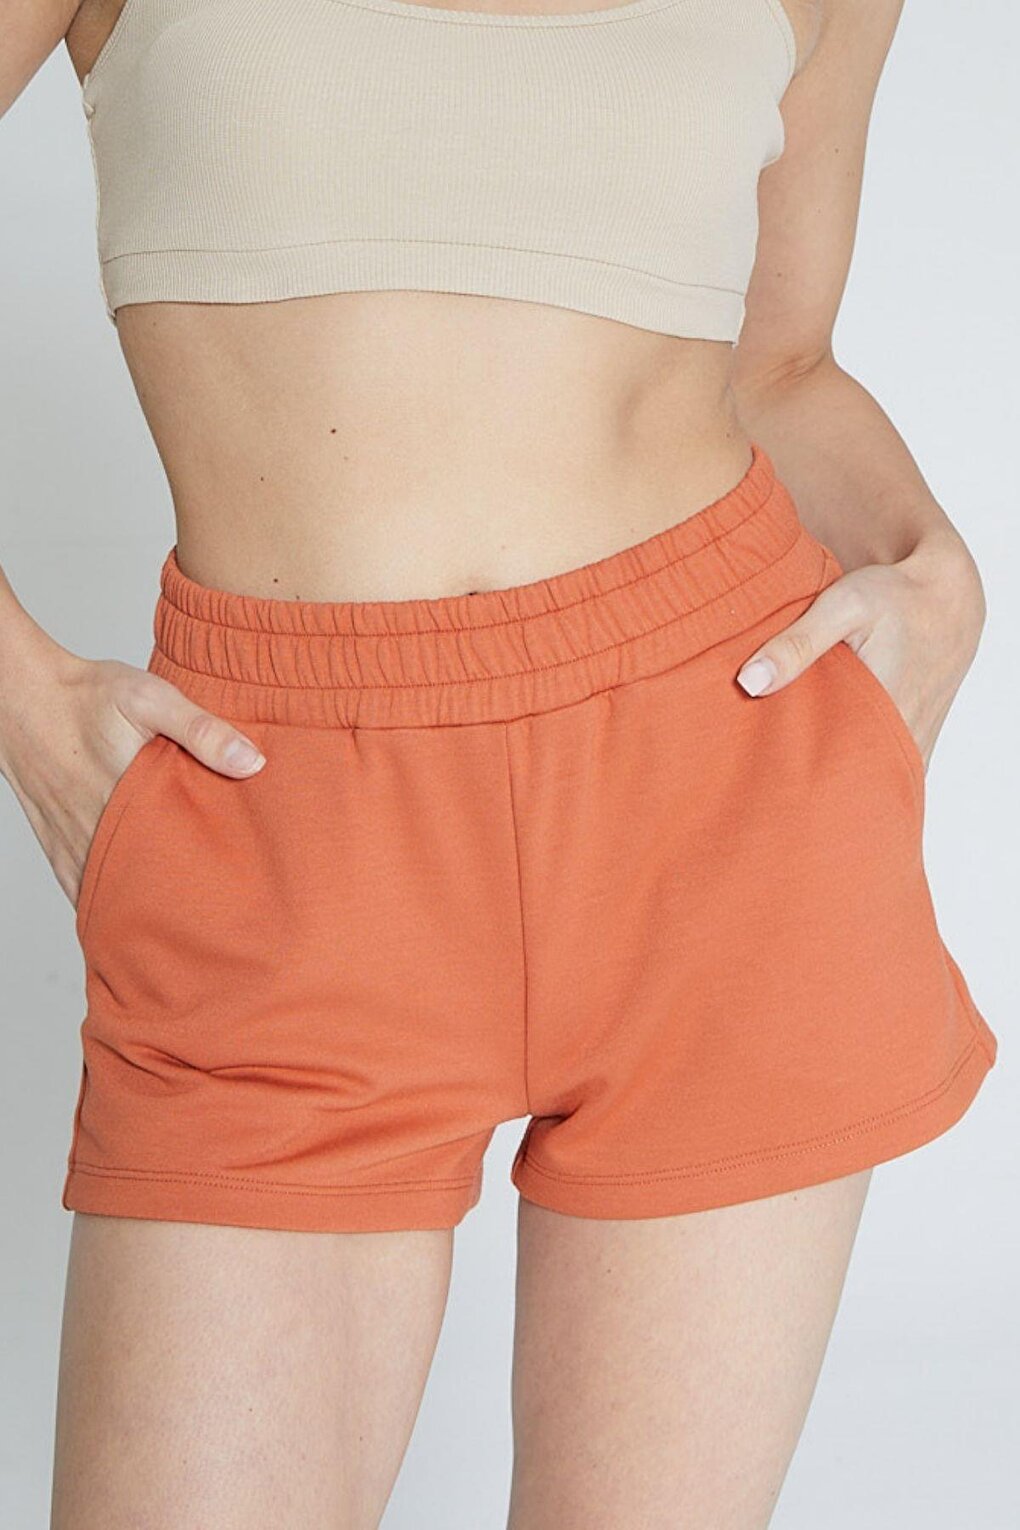 Оранжевые женские короткие шорты Soft Touch Chandraswear